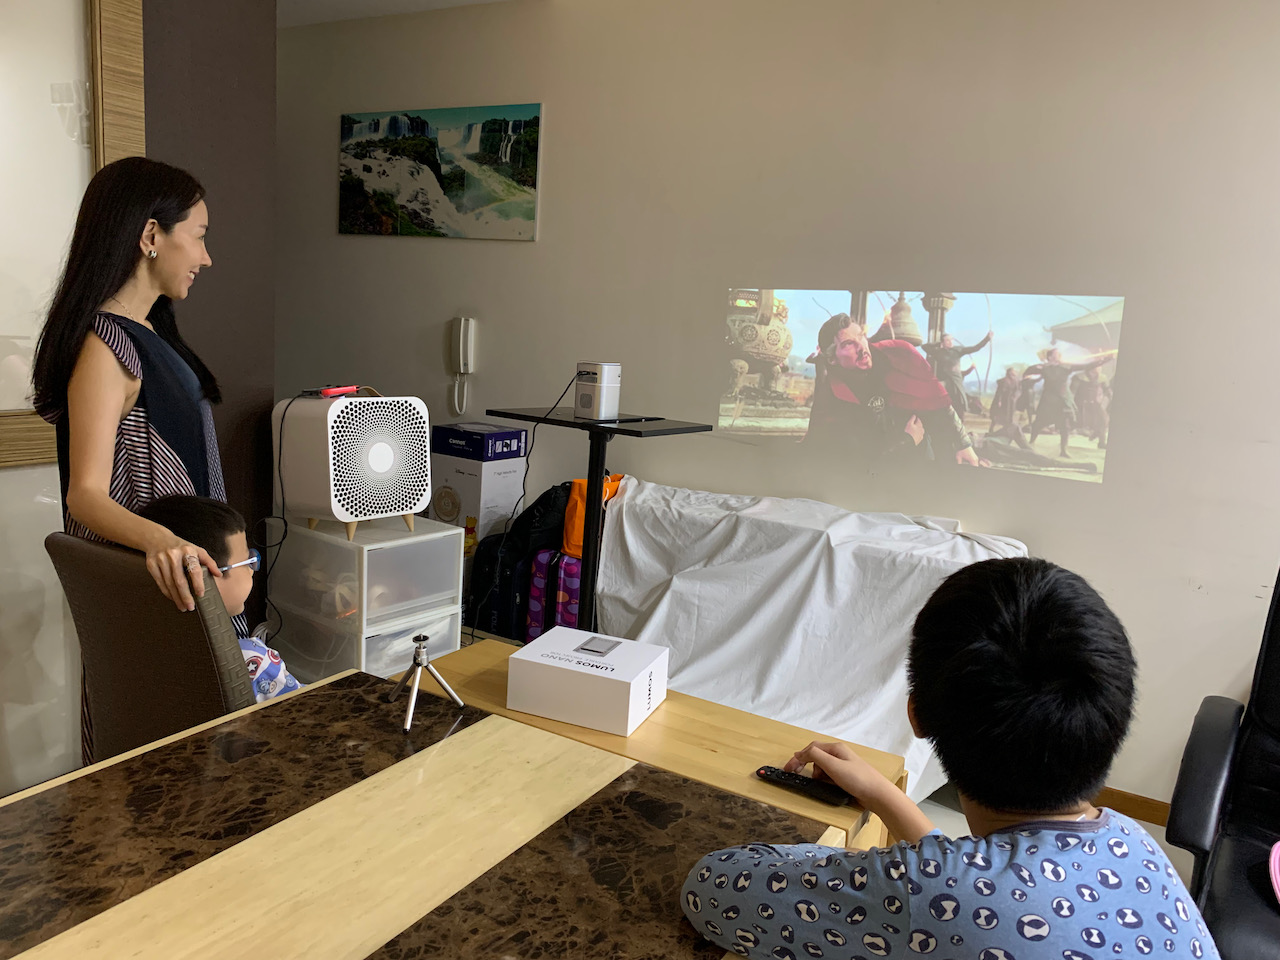 Review of LUMOS NANO Home Cinema Mini Portable Projector